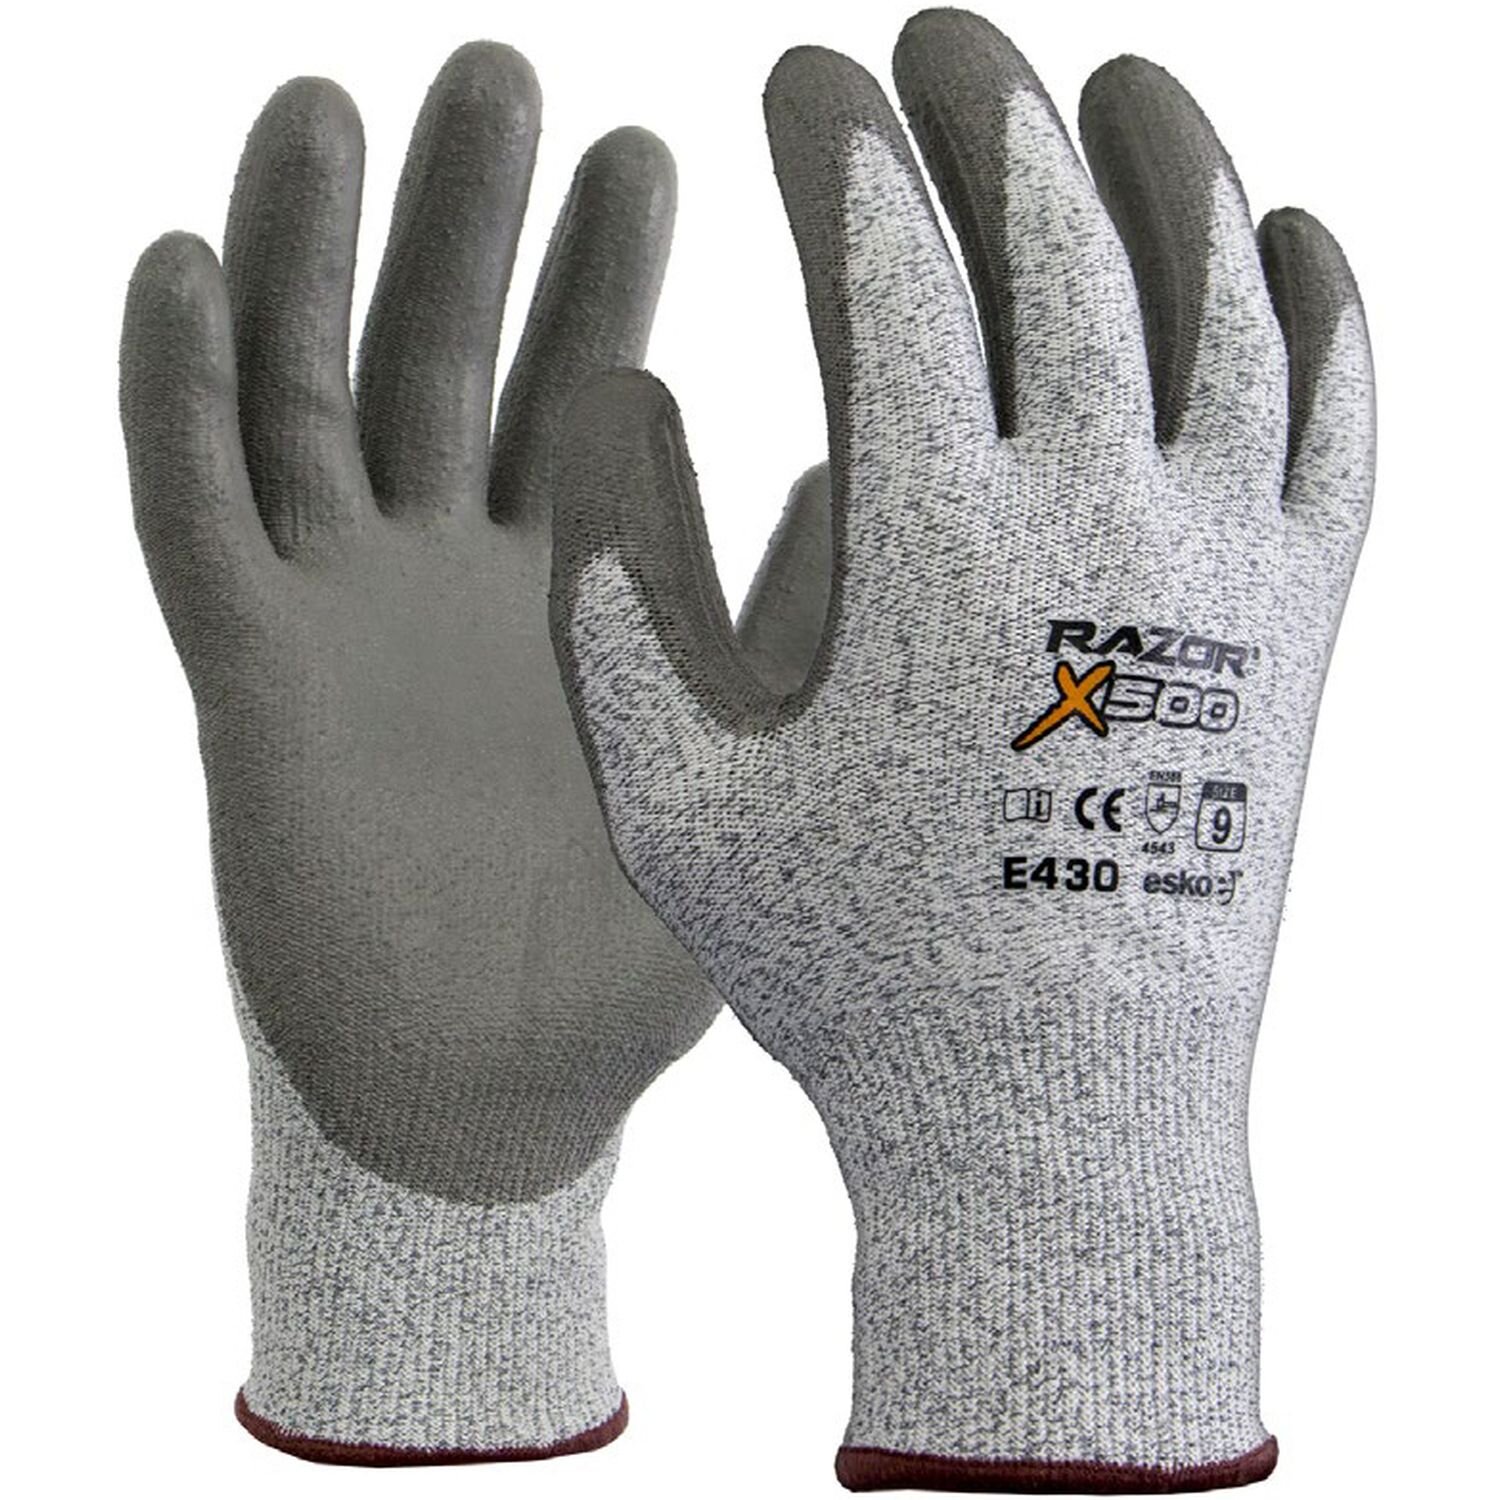 Razor X500 Cut 5 Resistant Level D Glove (Pkt 12)